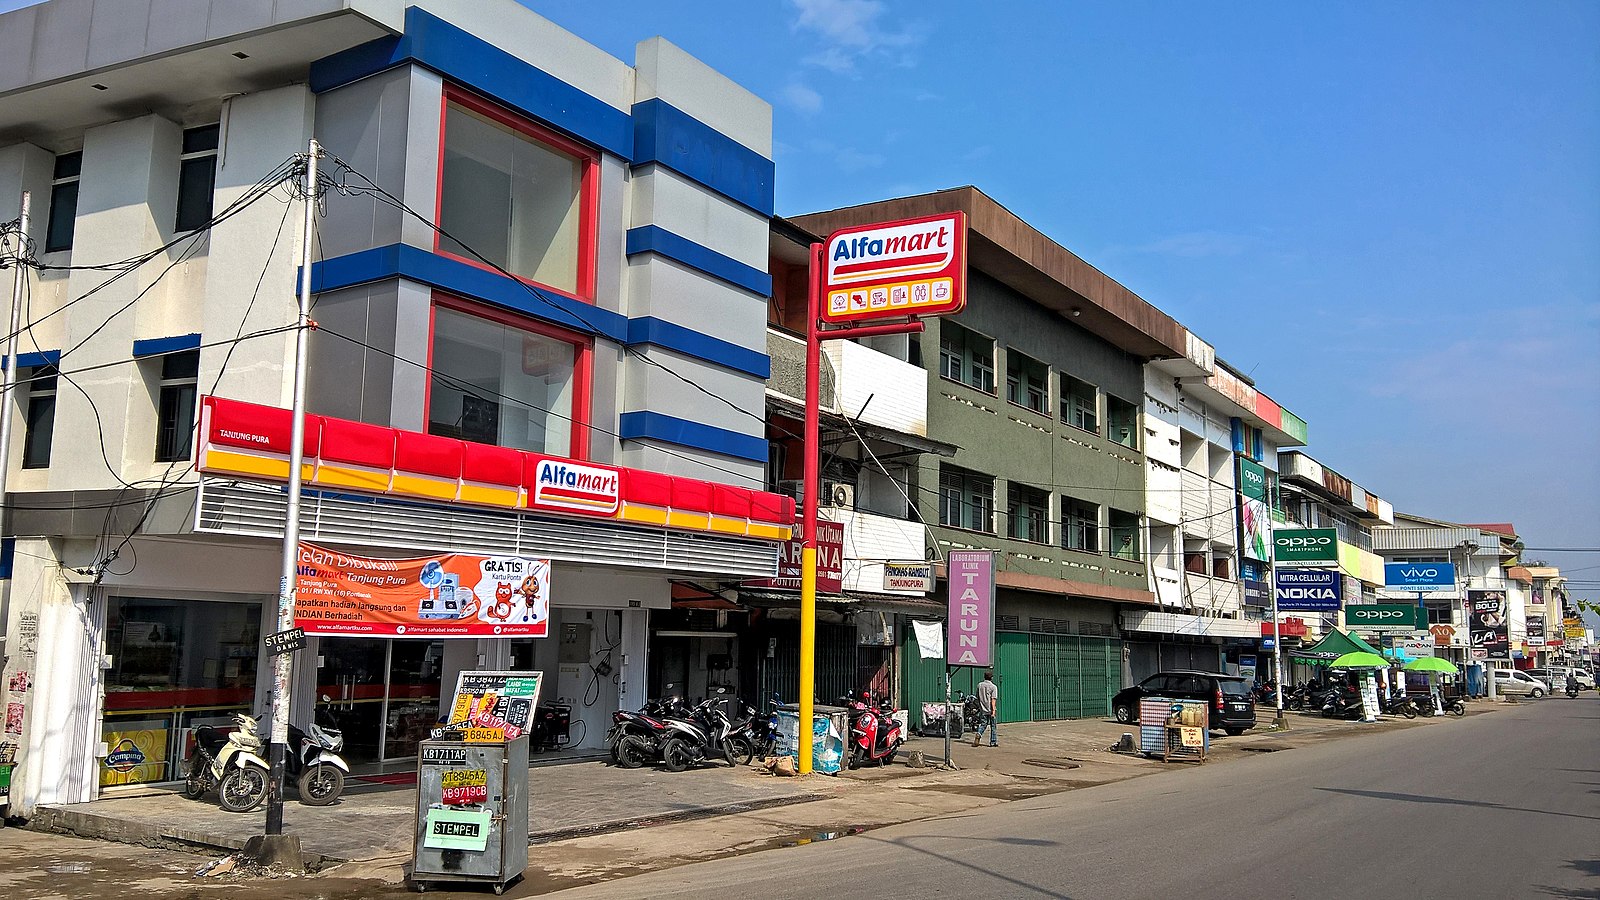 Indonesia convenience store Alfamart seeks 'new economy' growth | KrASIA